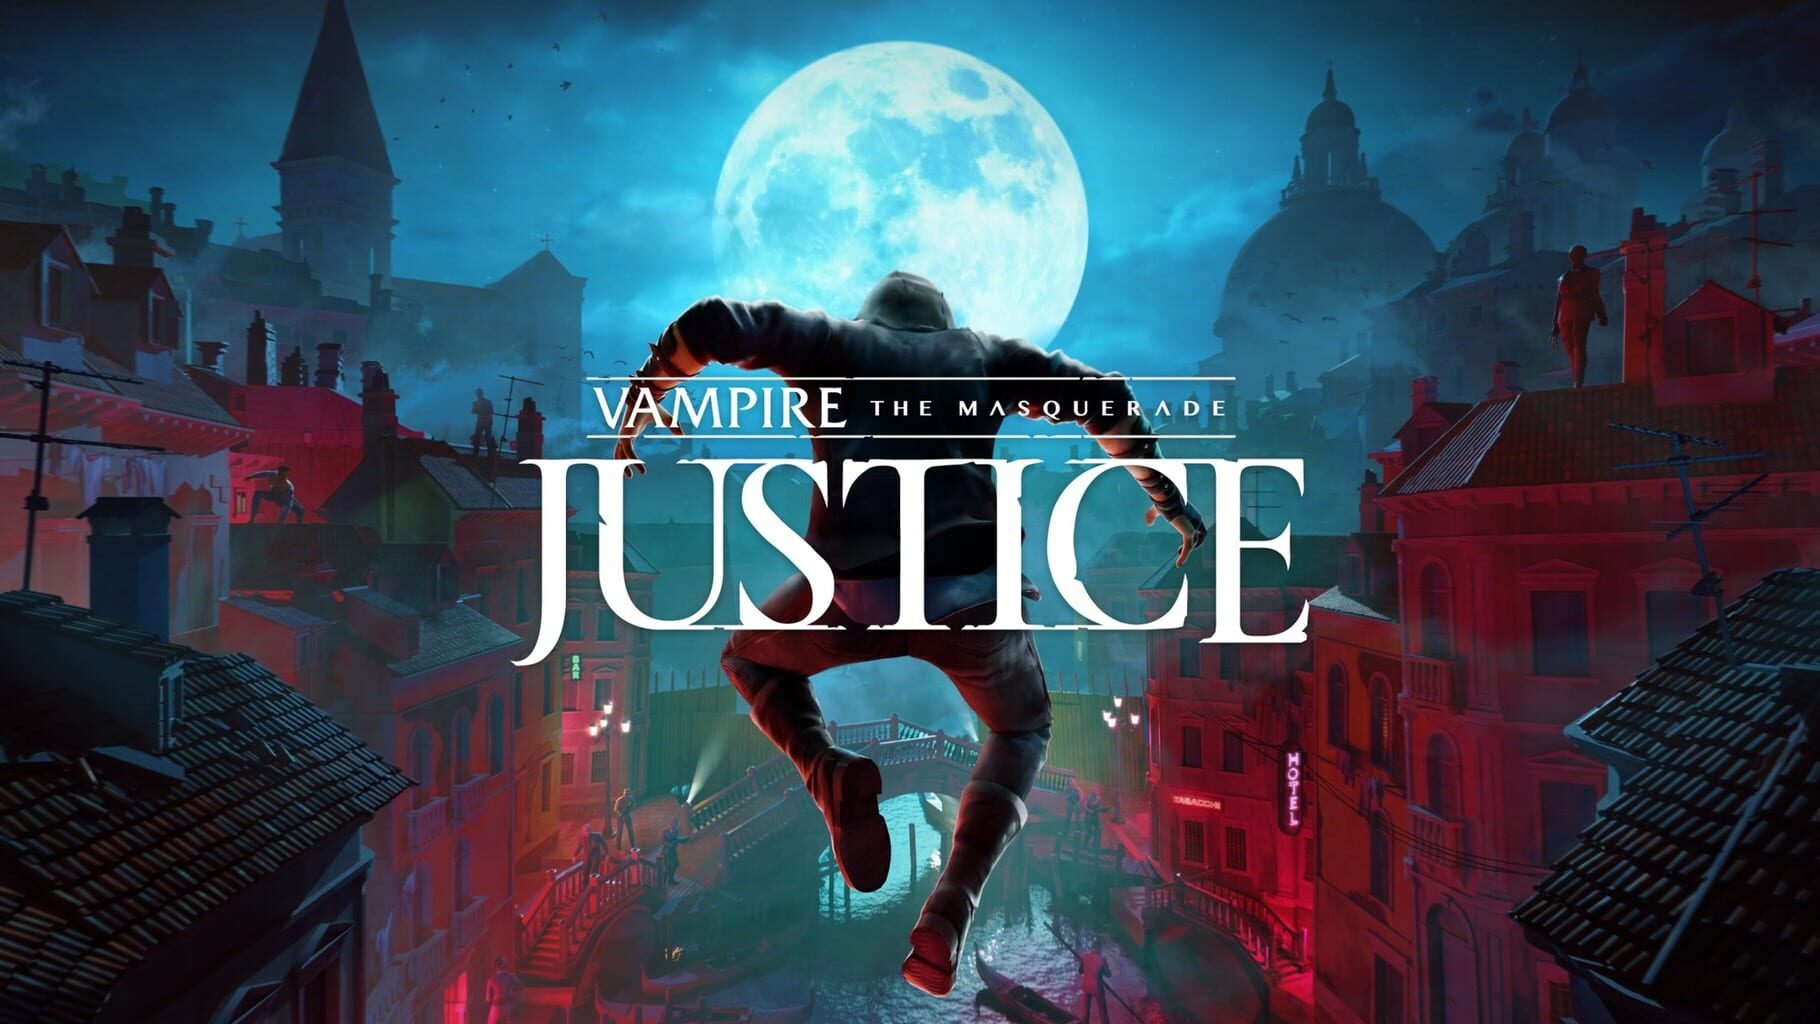 Arte - Vampire: The Masquerade - Justice